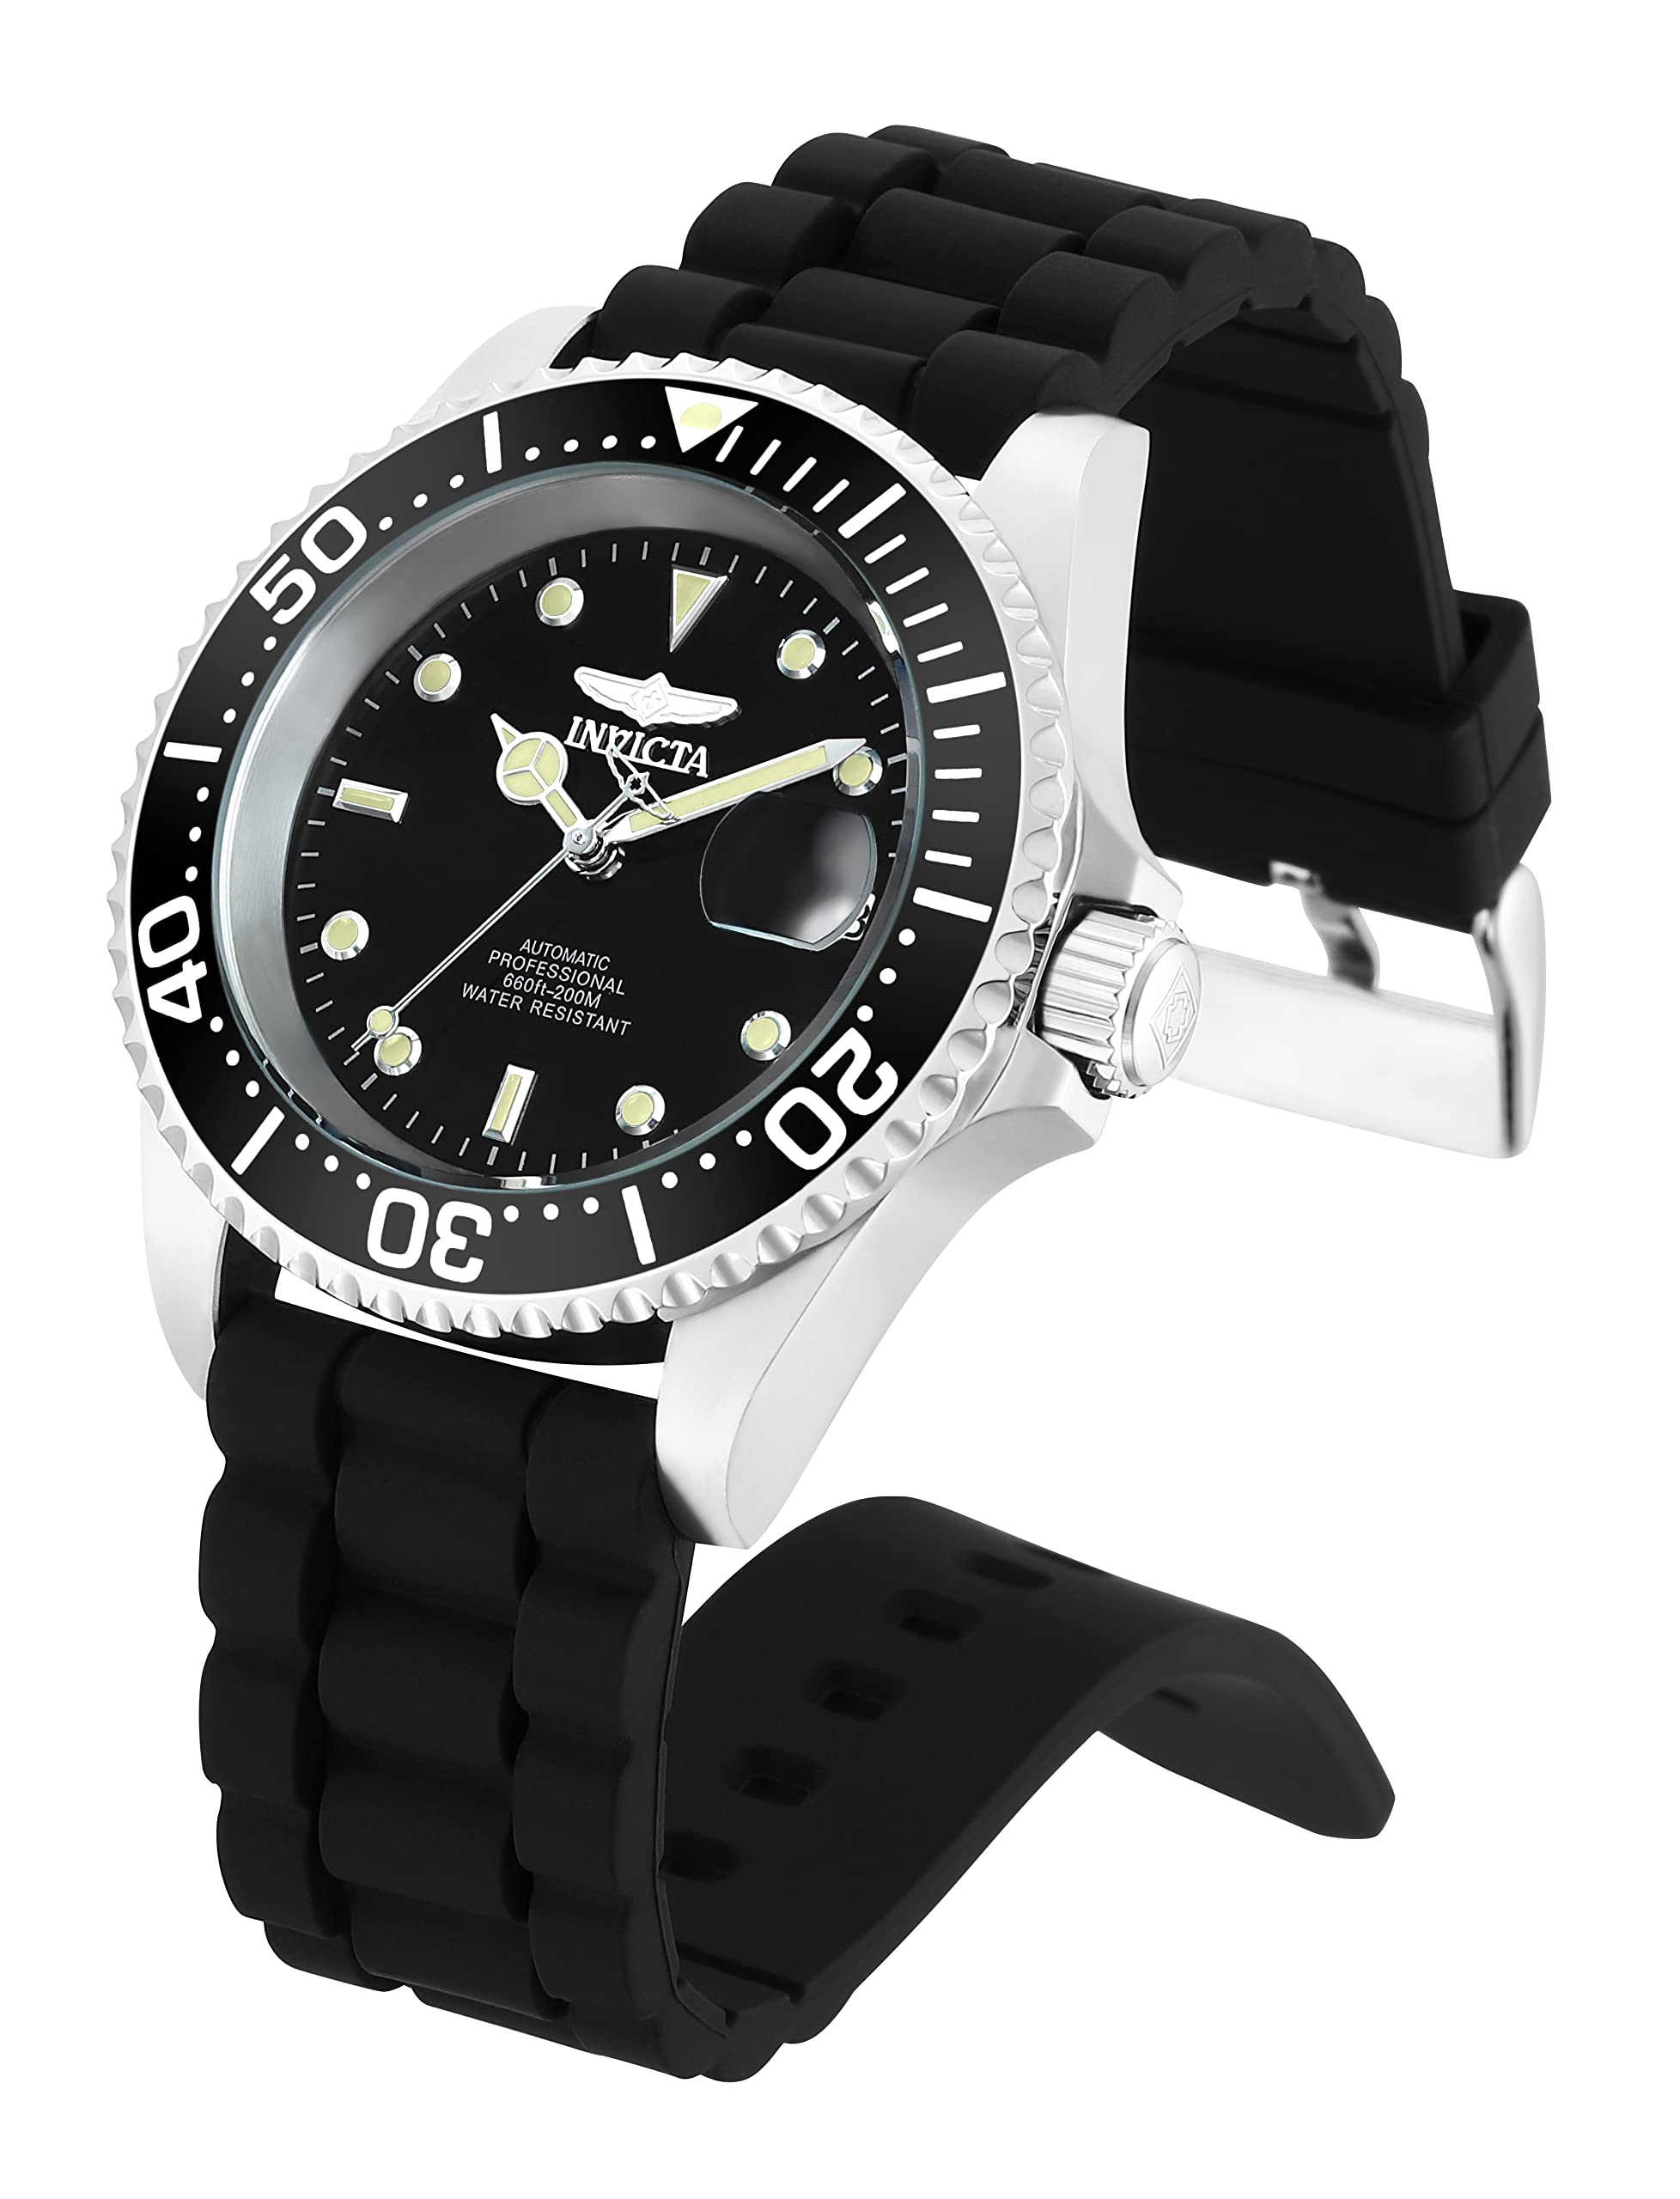 Invicta Men's Pro Diver Automatic Watch with Silicone Band, Black (Model 23678)